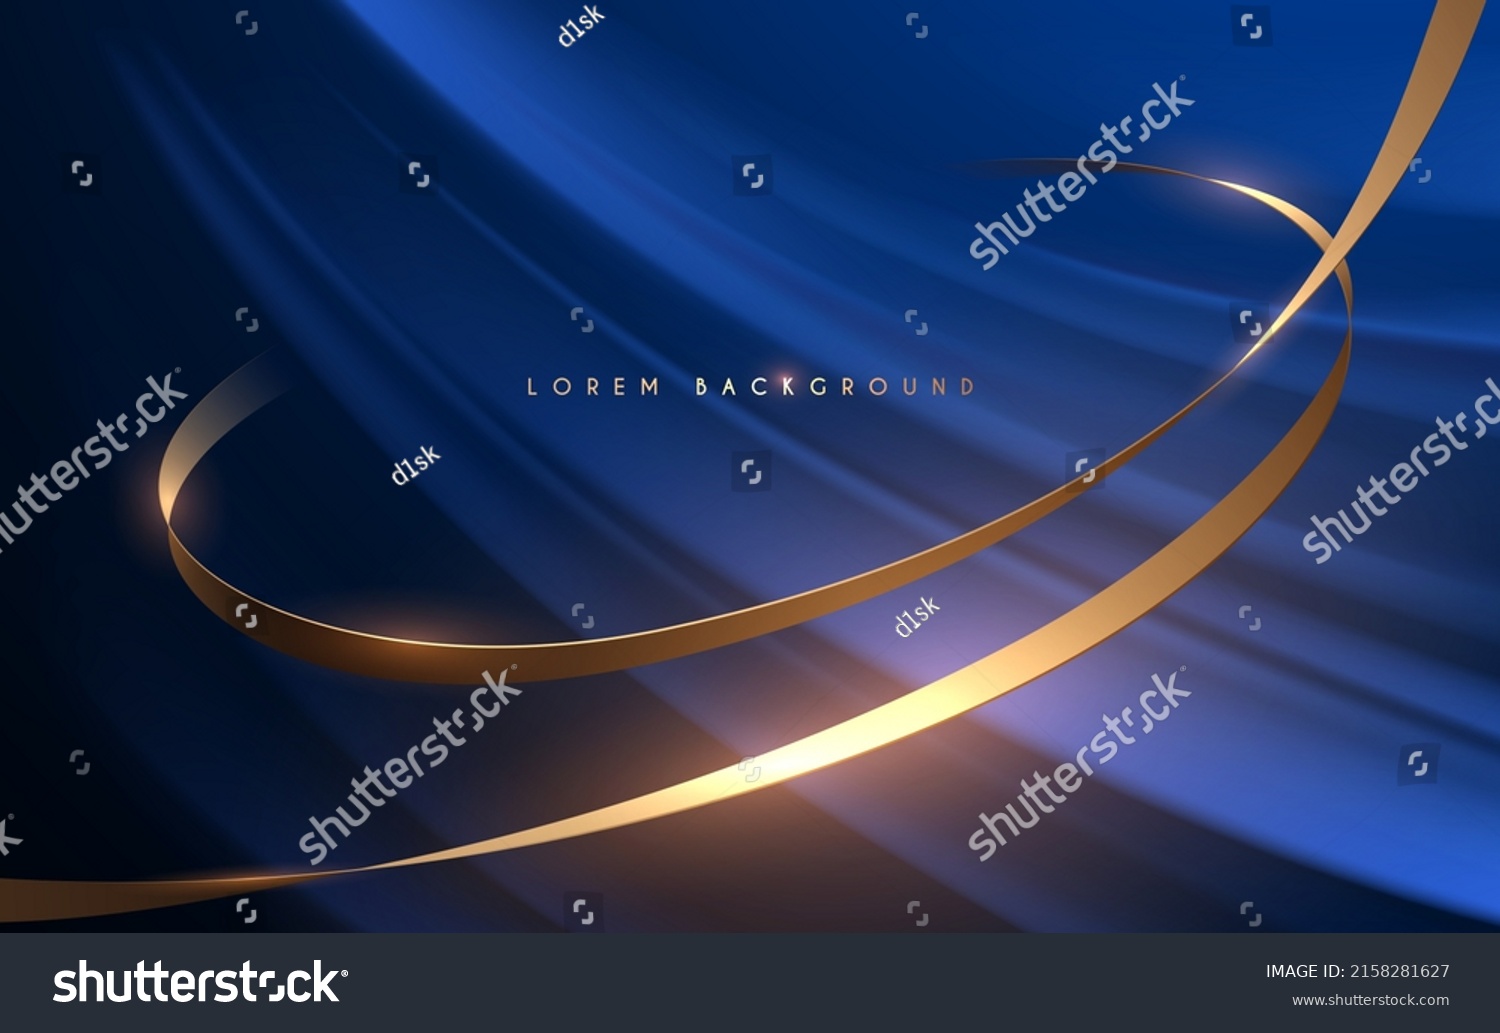 stock-vector-golden-ribbon-on-blue-background-2158281627